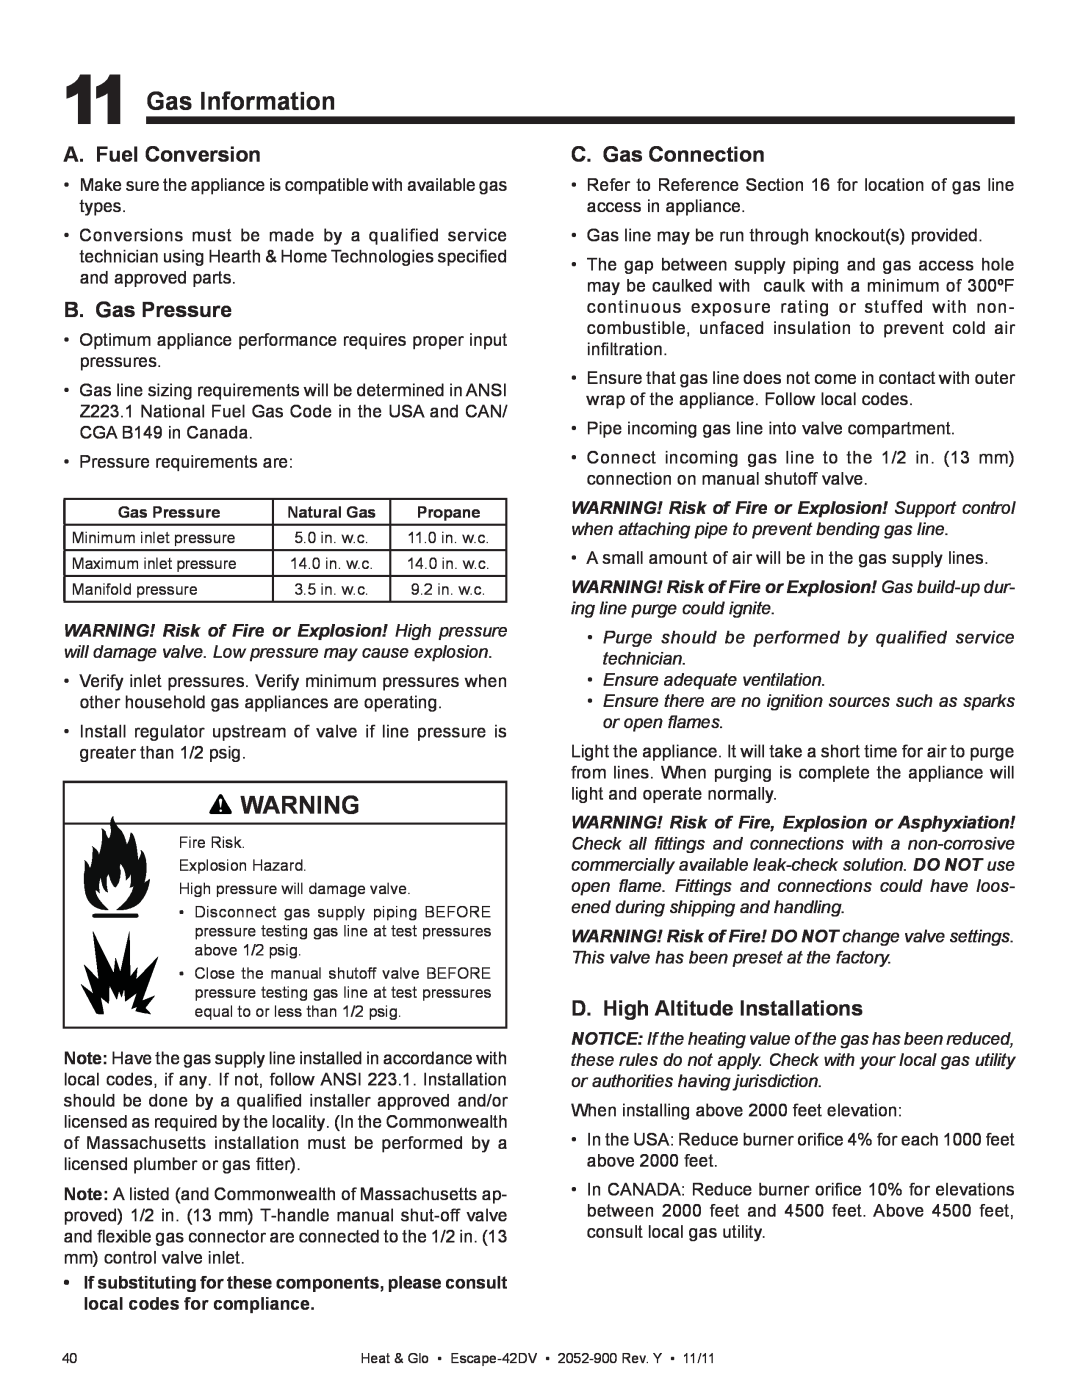 Heat & Glo LifeStyle Escape-42DVLP owner manual Gas Information, A. Fuel Conversion, B. Gas Pressure, C. Gas Connection 